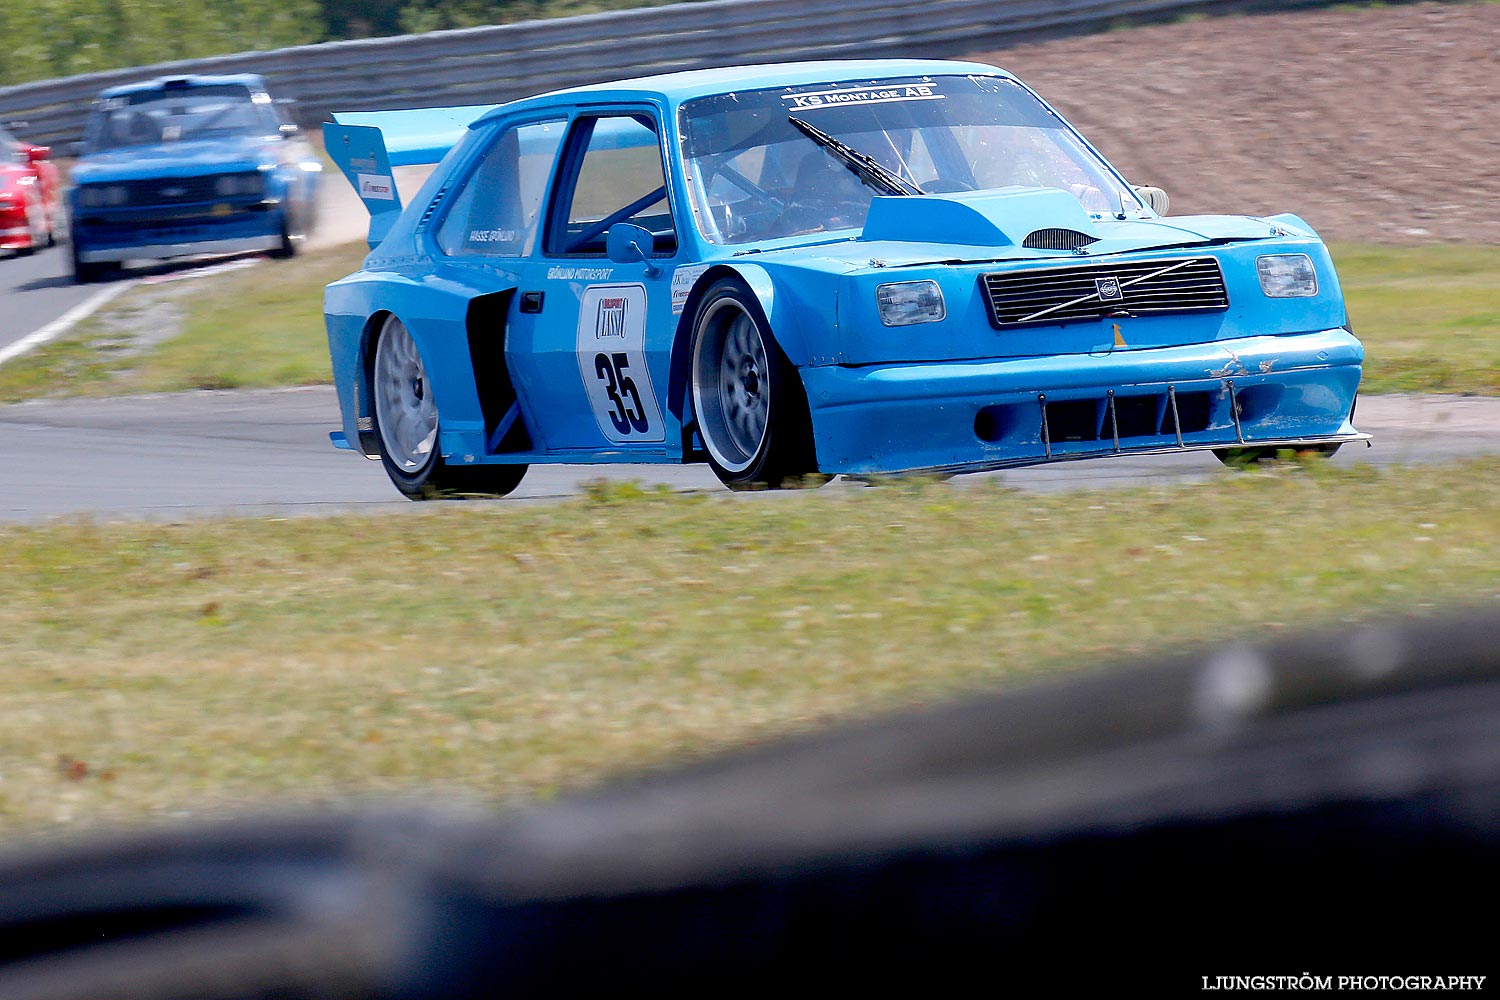 SSK Raceweek,mix,Kinnekulle Ring,Götene,Sverige,Motorsport,,2014,90483